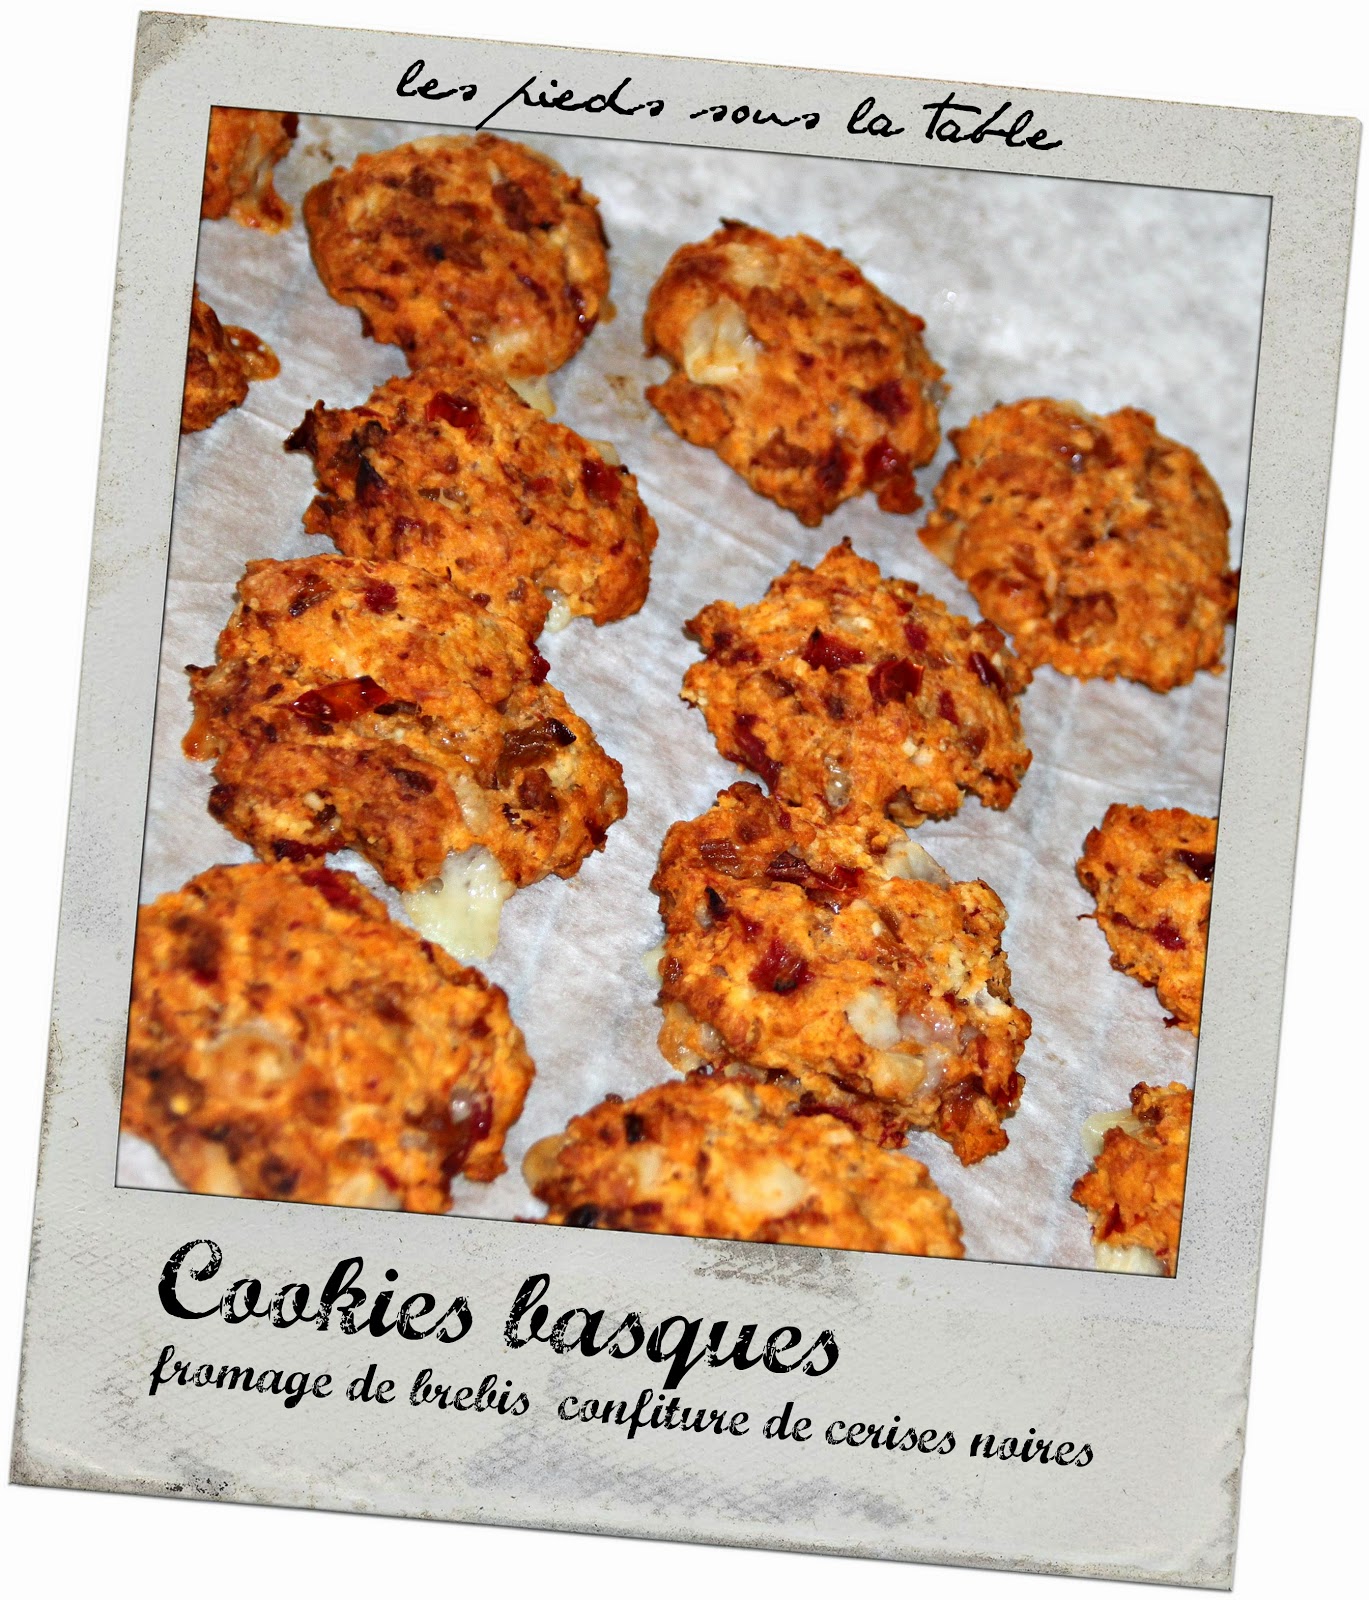 Les Cookies basques